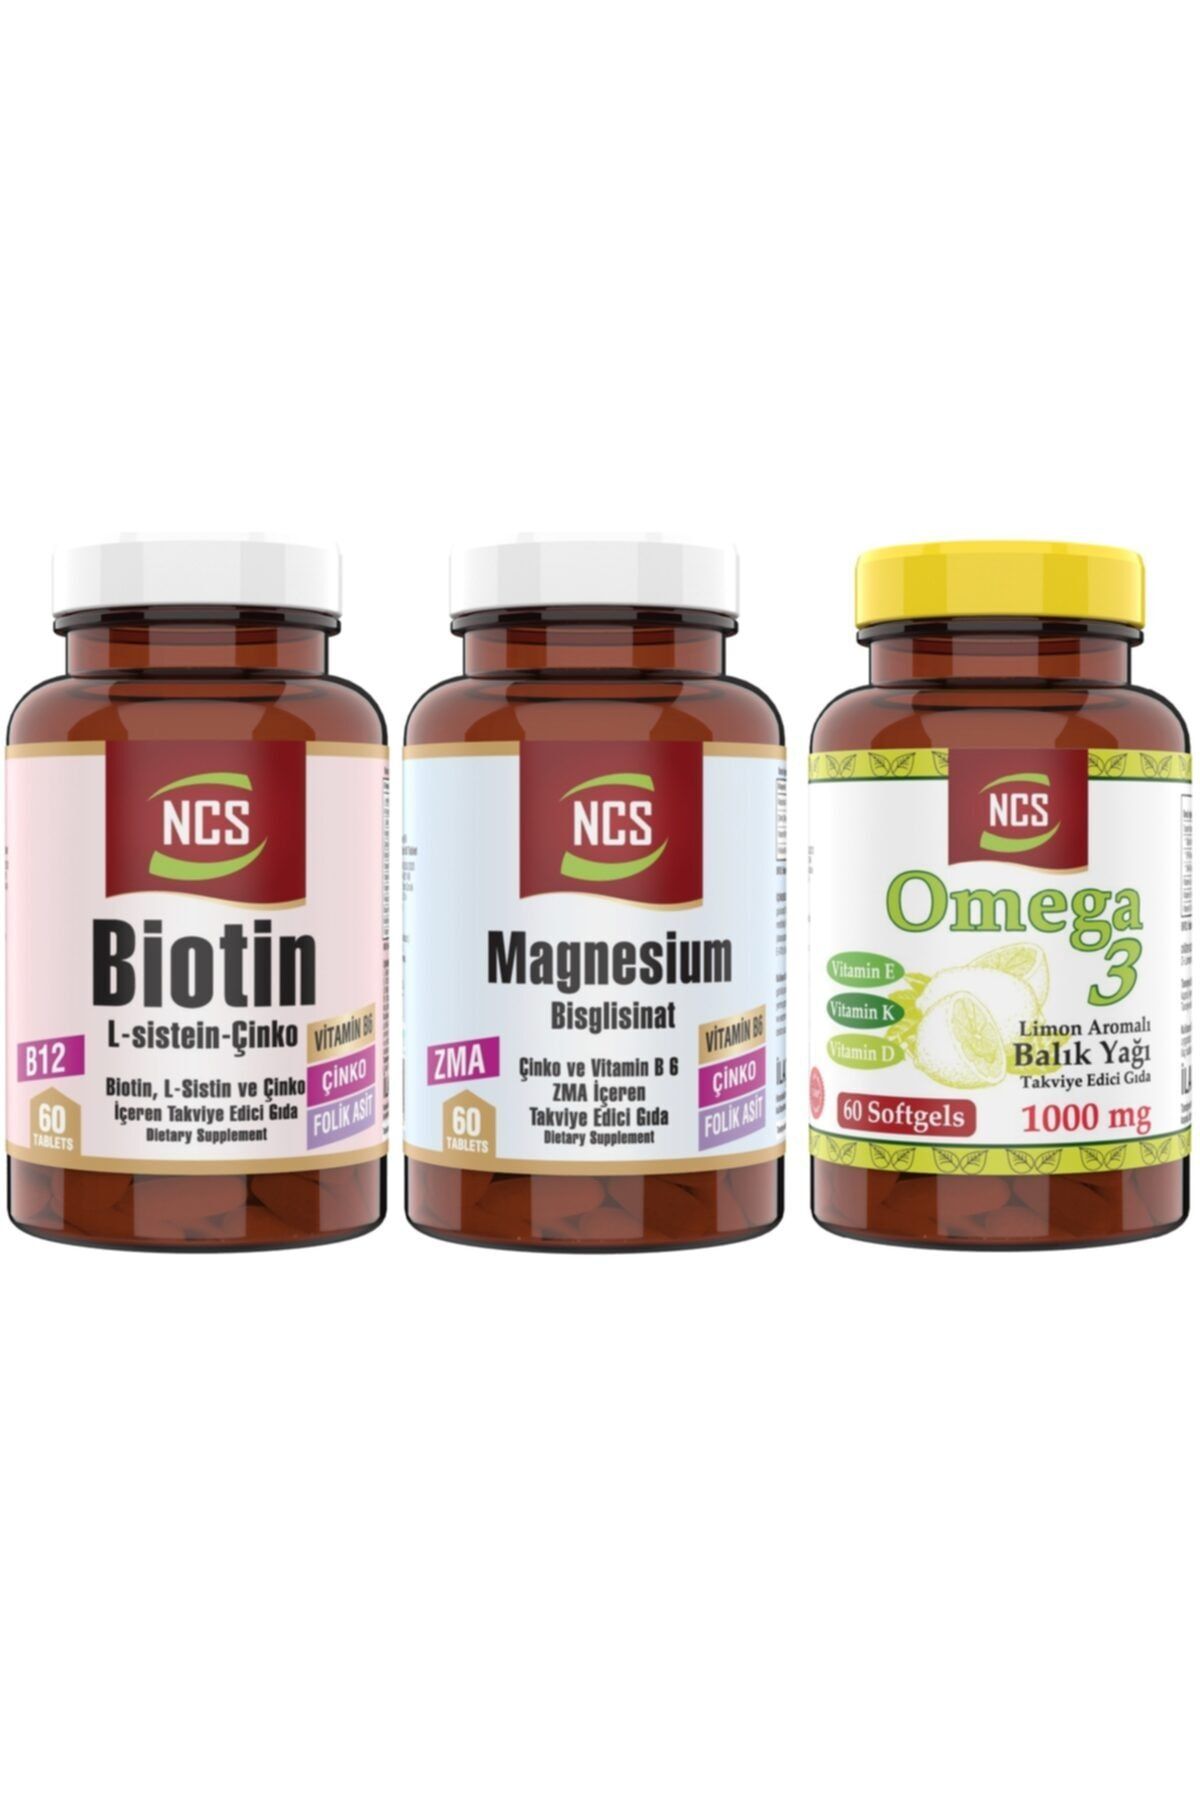 Ncs Biotin 60 Tablet Magnesium 60 Tablet Omega 3 Fish Oil 60 Kap